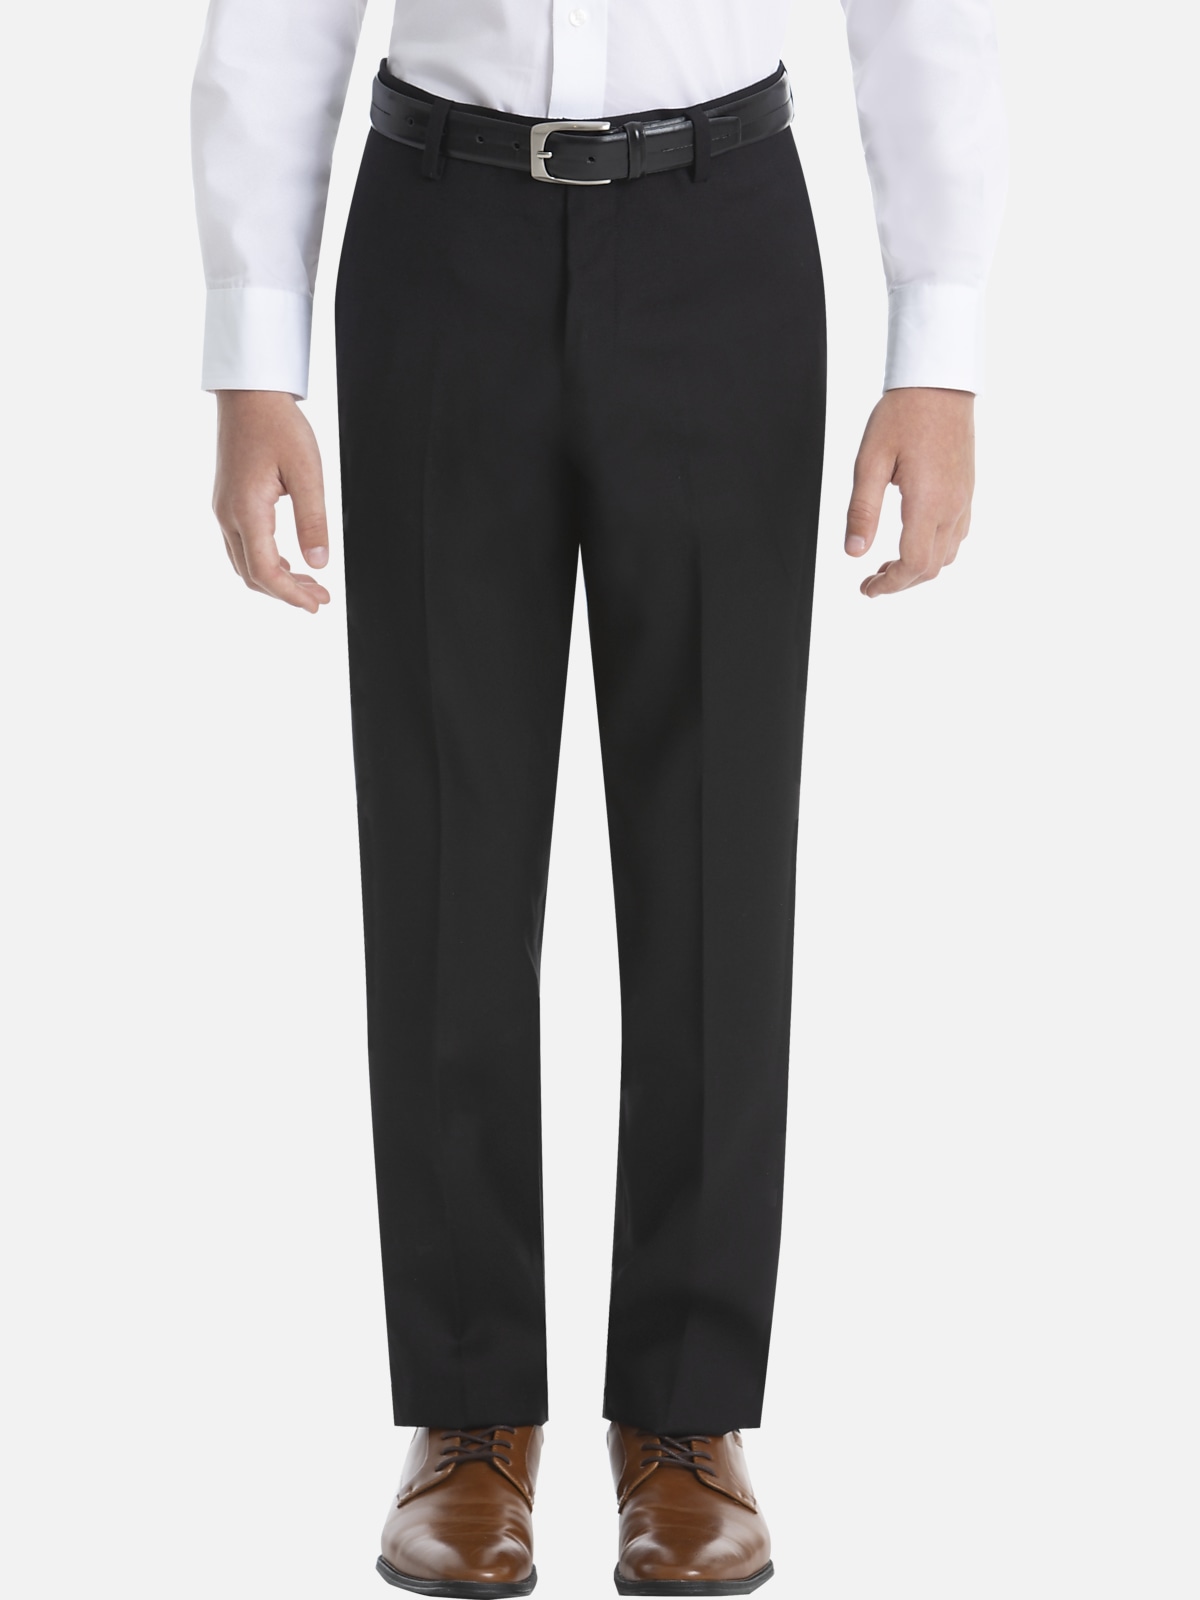 Lauren By Ralph Lauren Boys (Sizes 8-20) Suit Separates Tuxedo Pants ...